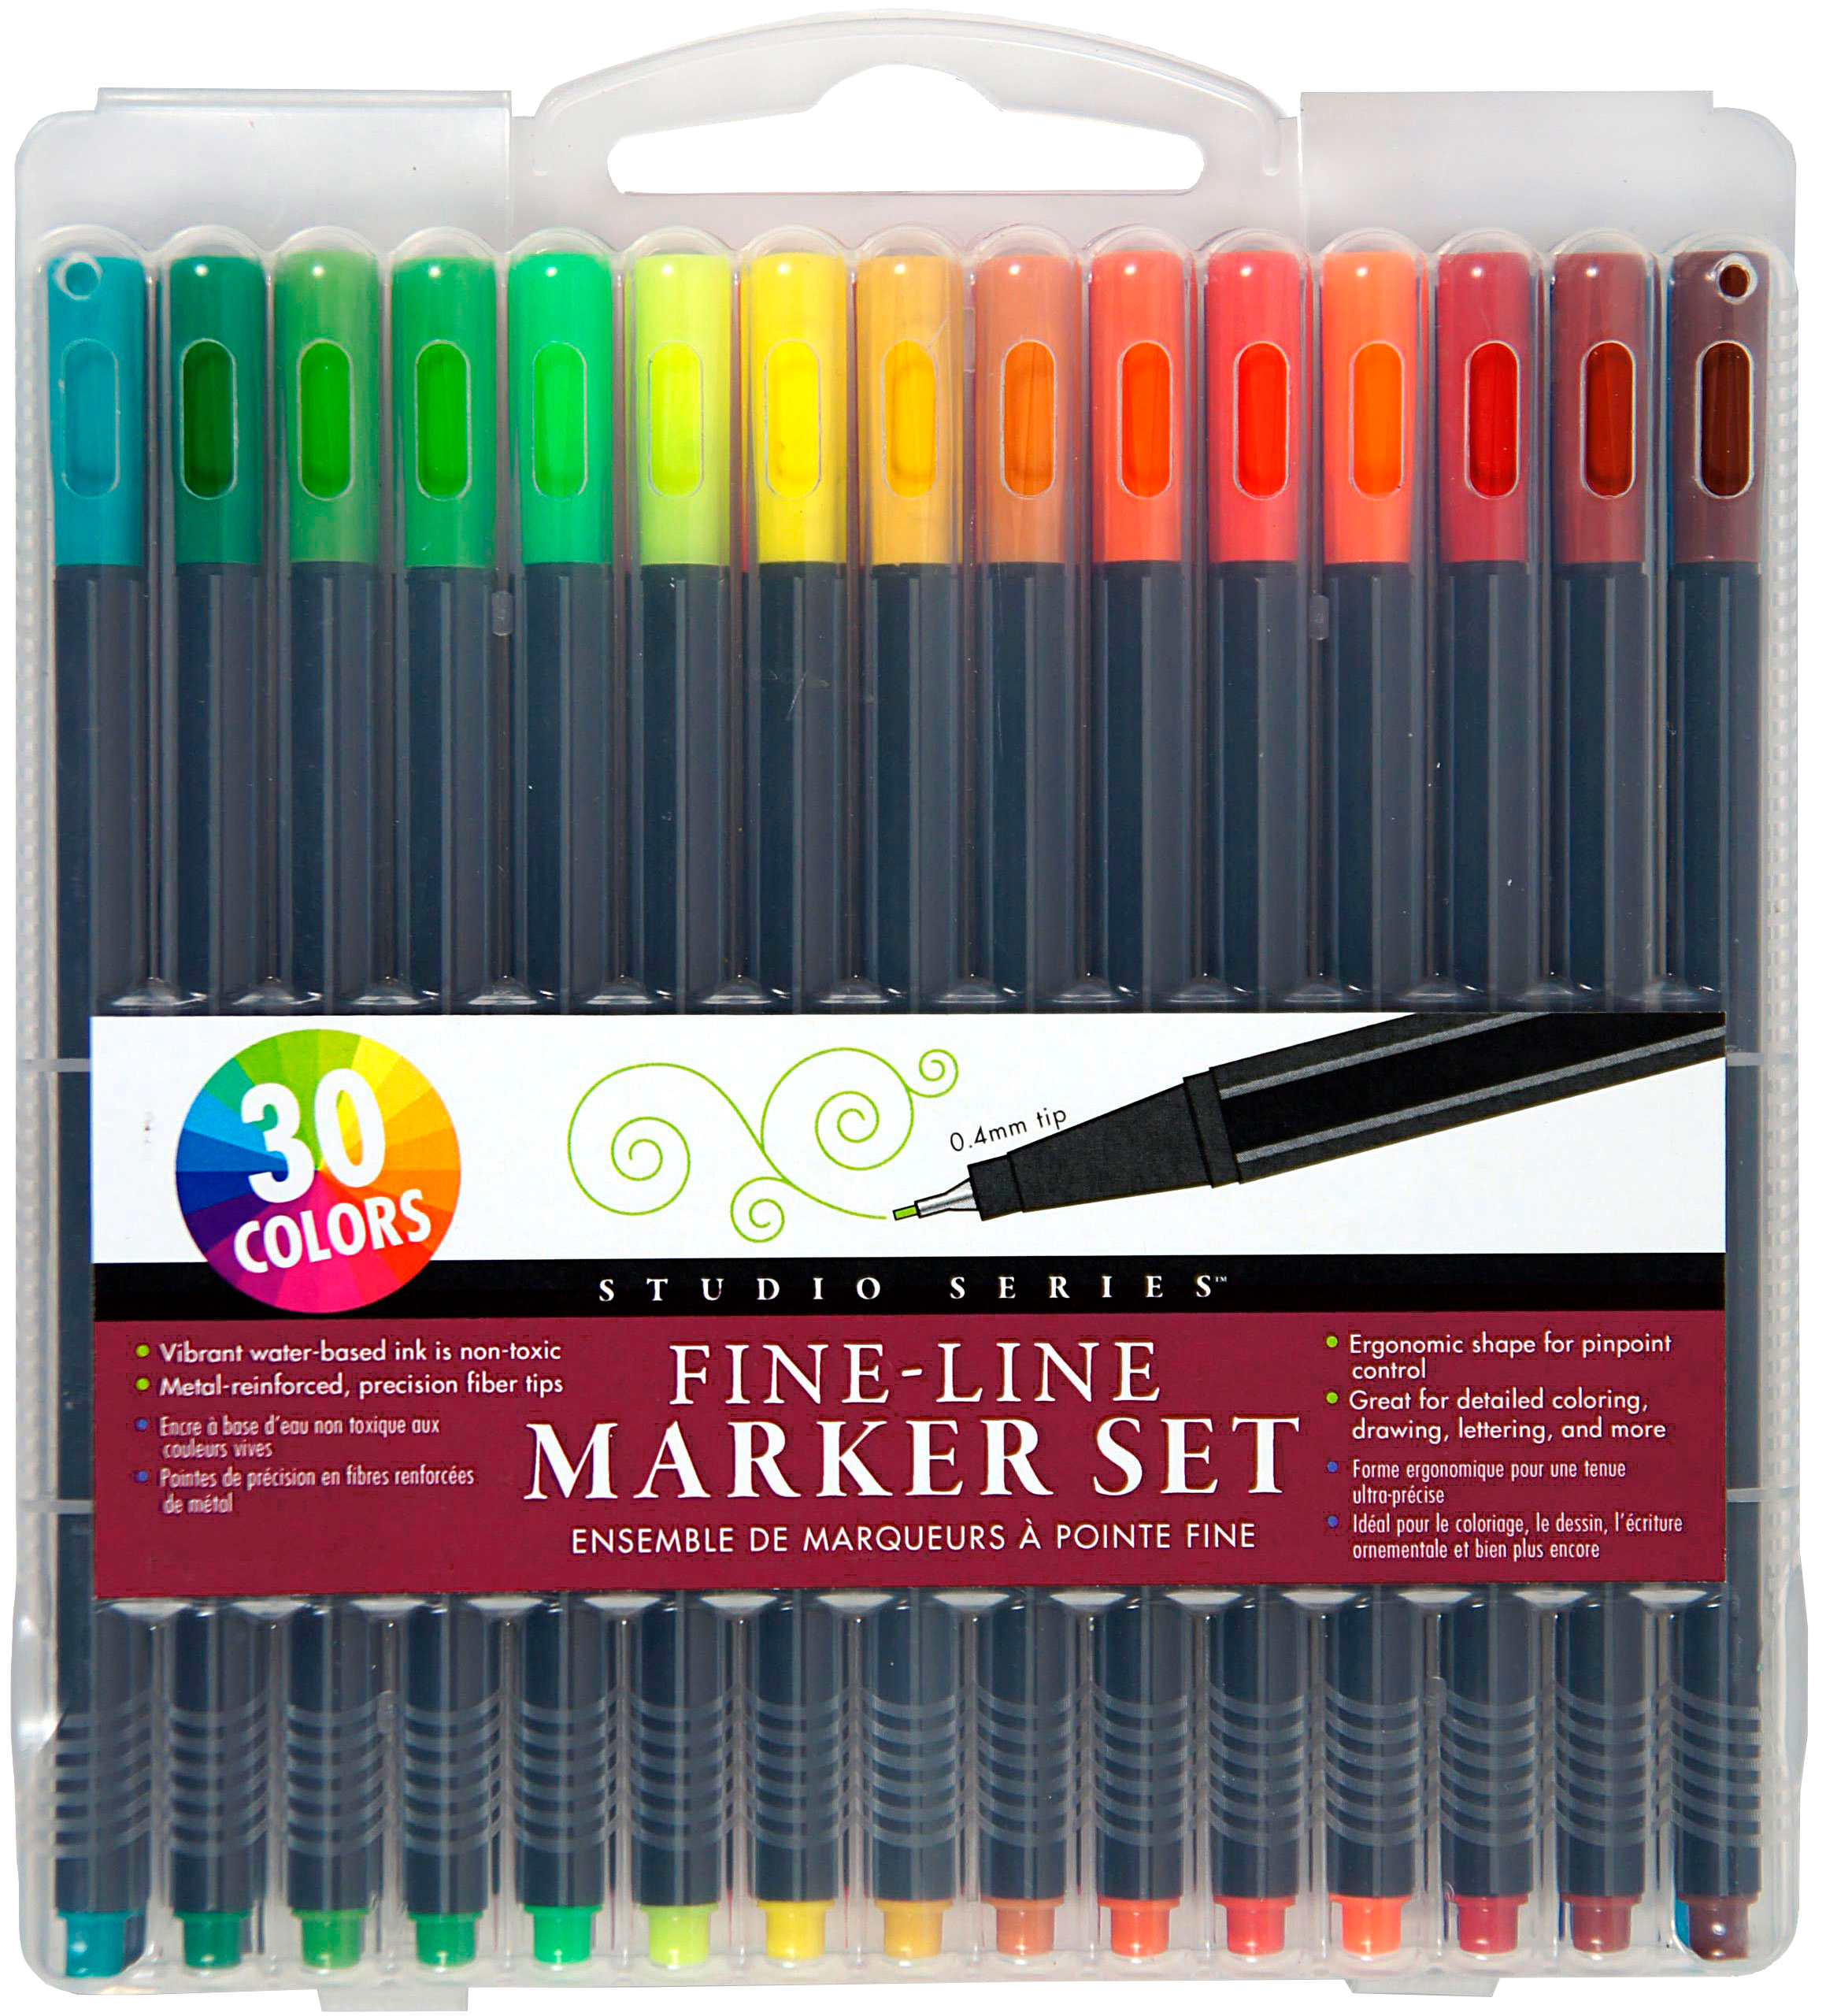 Dry Erase Markers Whiteboard Marker Pens Set 13 Colors Chisel Tip